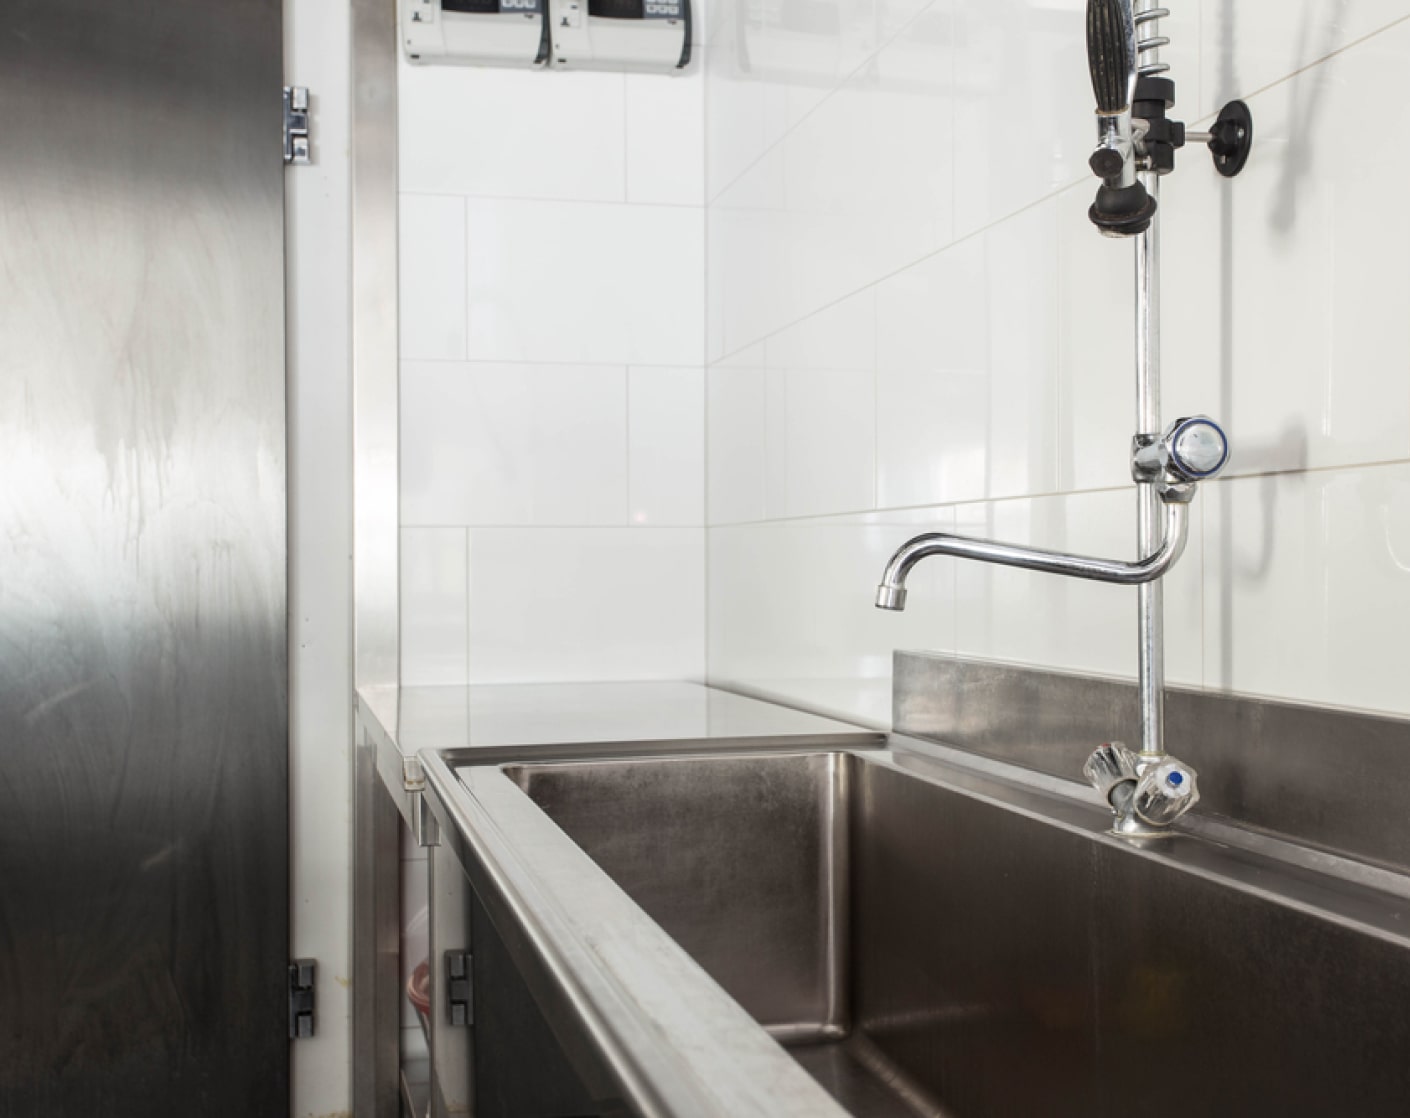 commercial sink sprayer repair cost